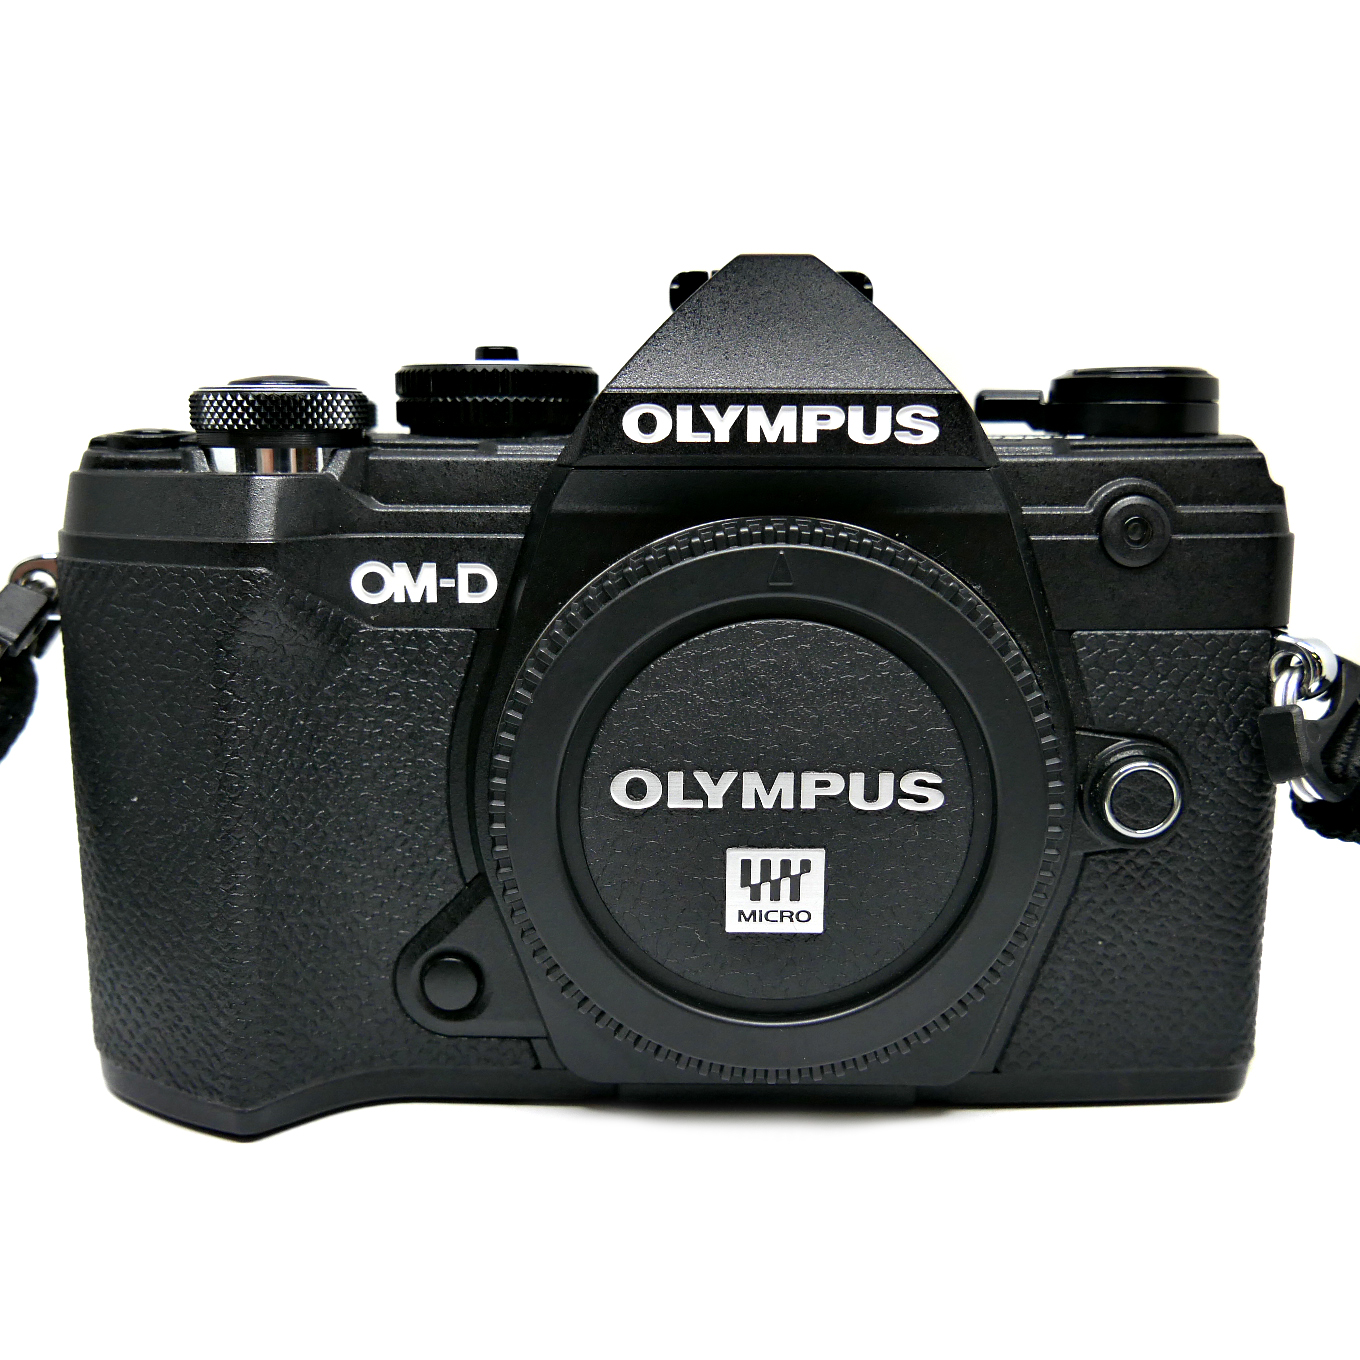 (Myyty) Olympus OM-D E-M5 Mark III (SC:2290) (käytetty) (takuu)